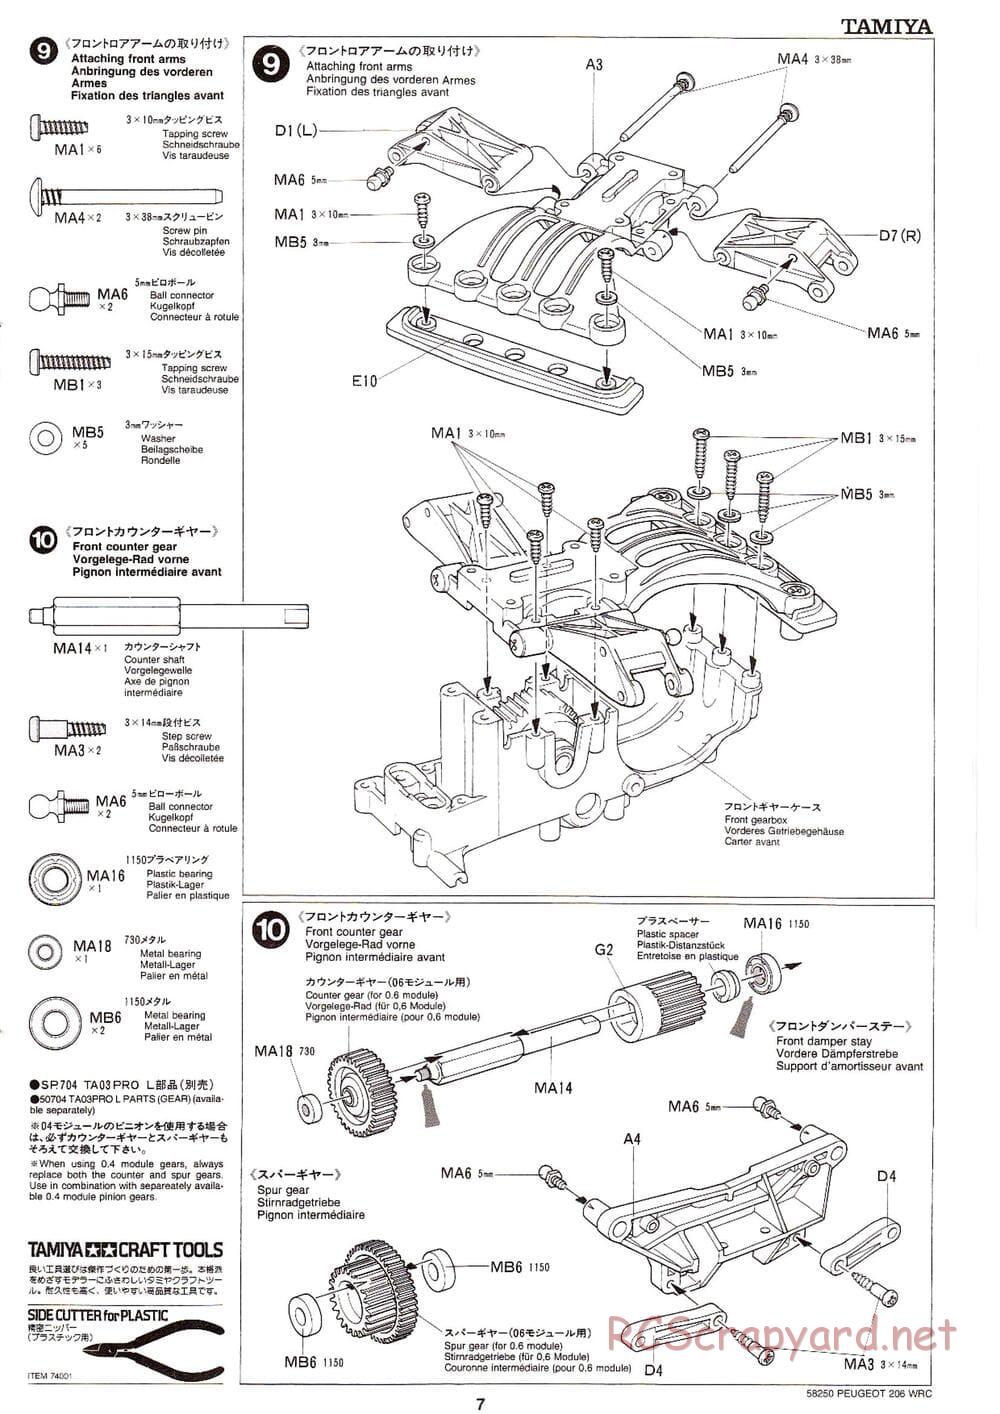 Tamiya - Peugeot 206 WRC - TA-03FS Chassis - Manual - Page 7